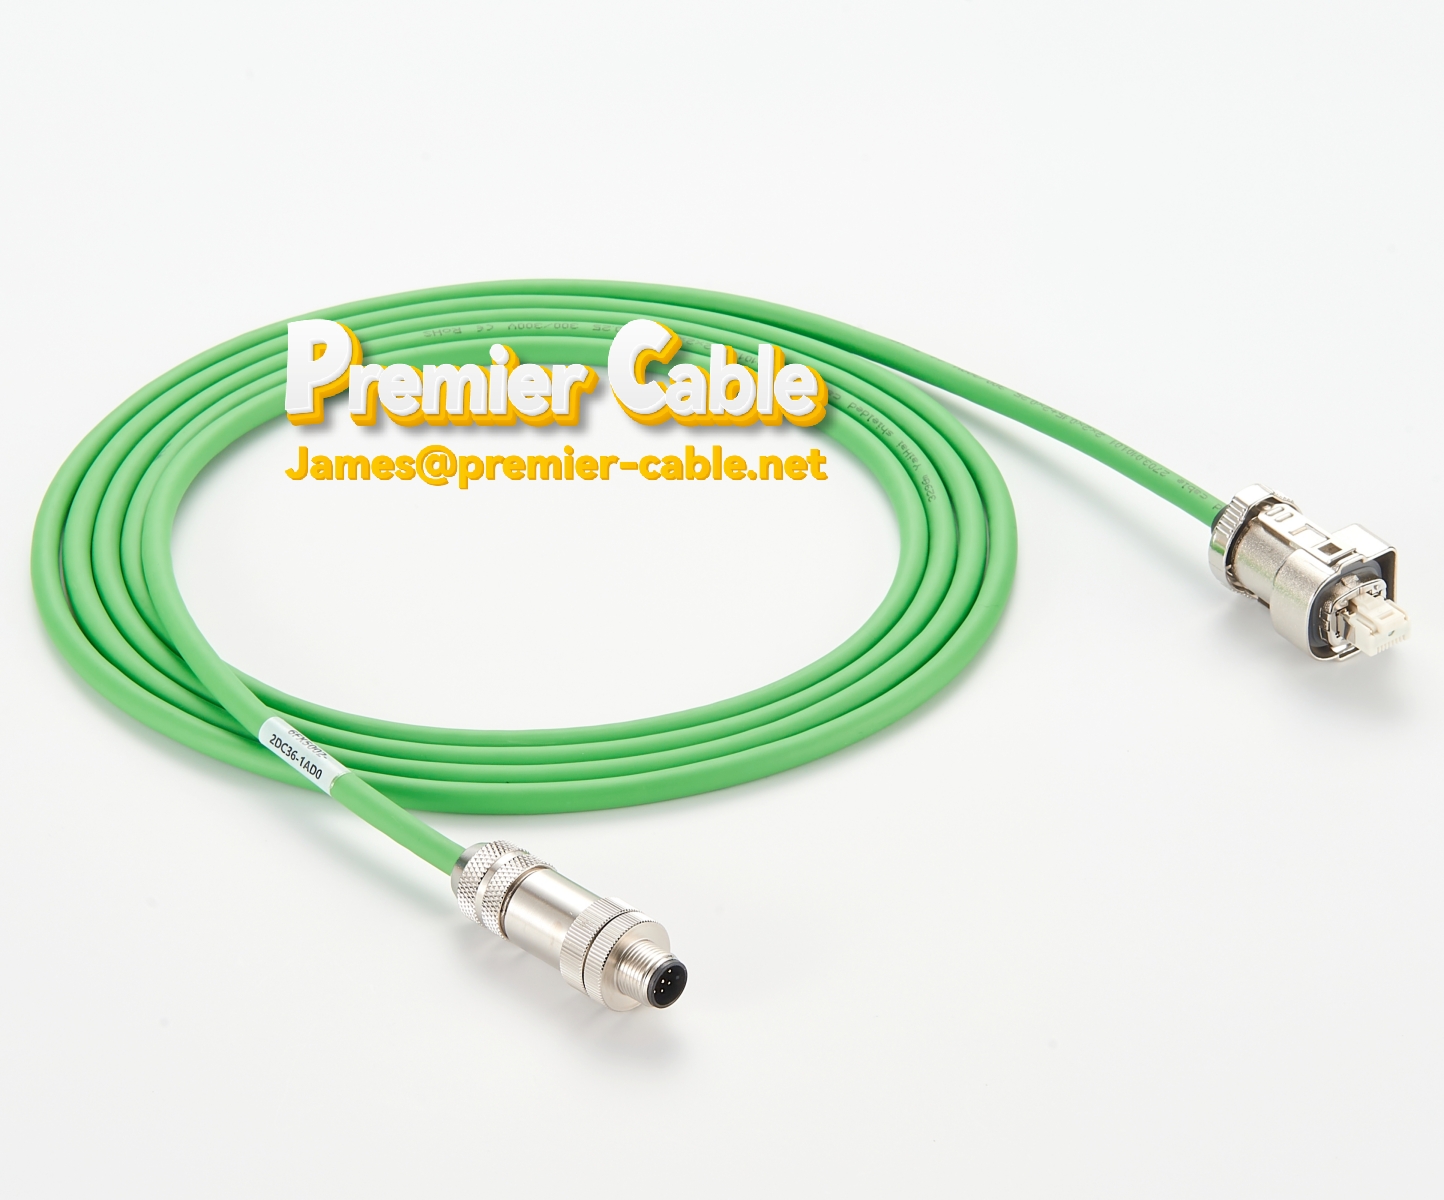 DRIVE-CLiQ Signal cable pre-assembled with RJ45 M12 